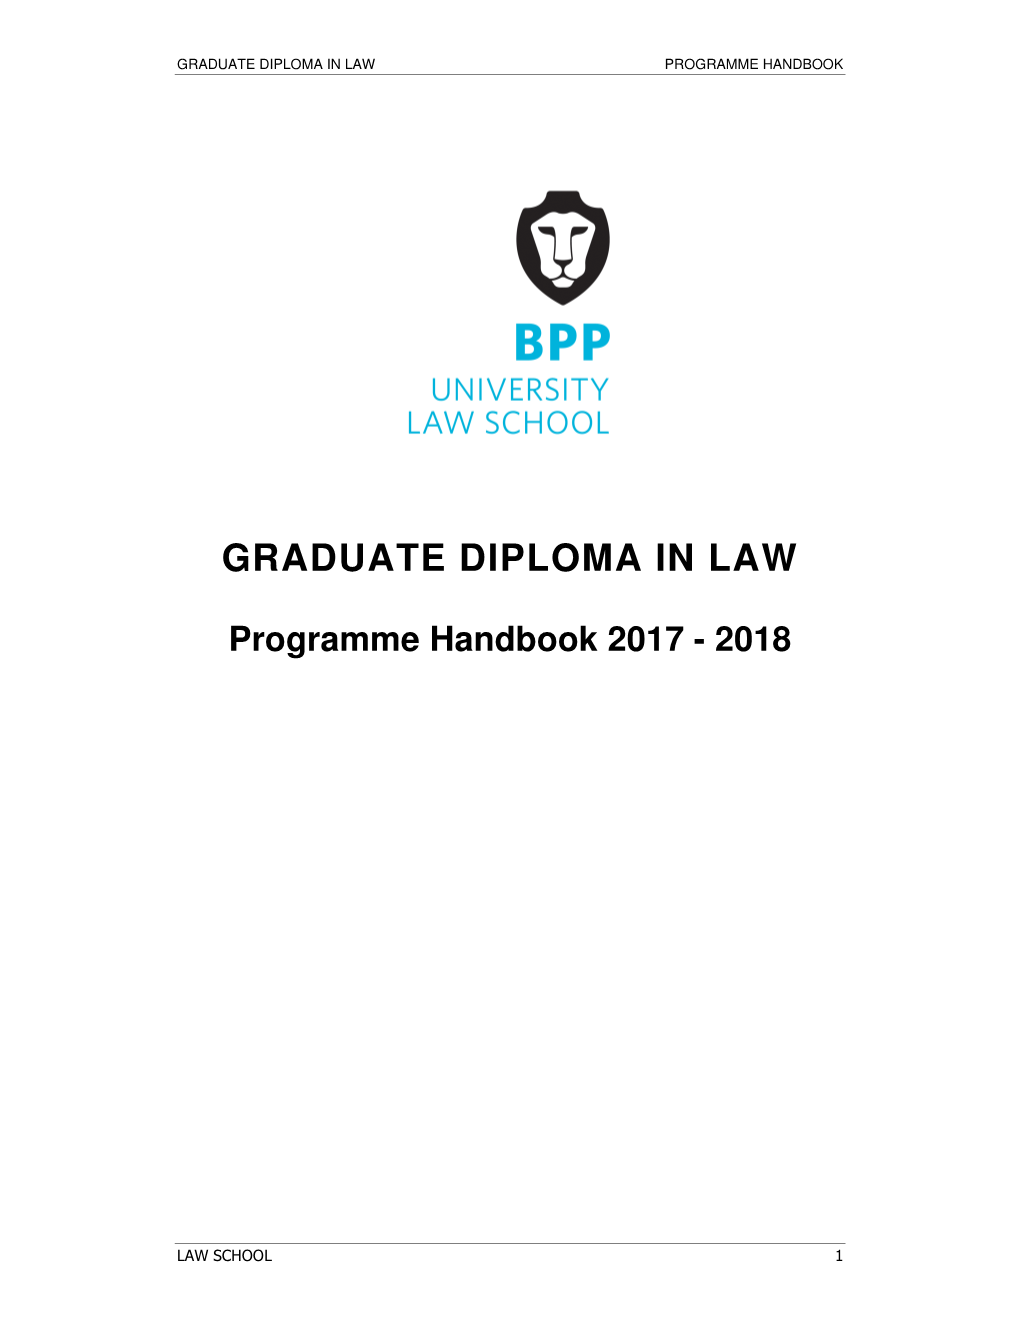 Graduate Diploma in Law Programme Handbook